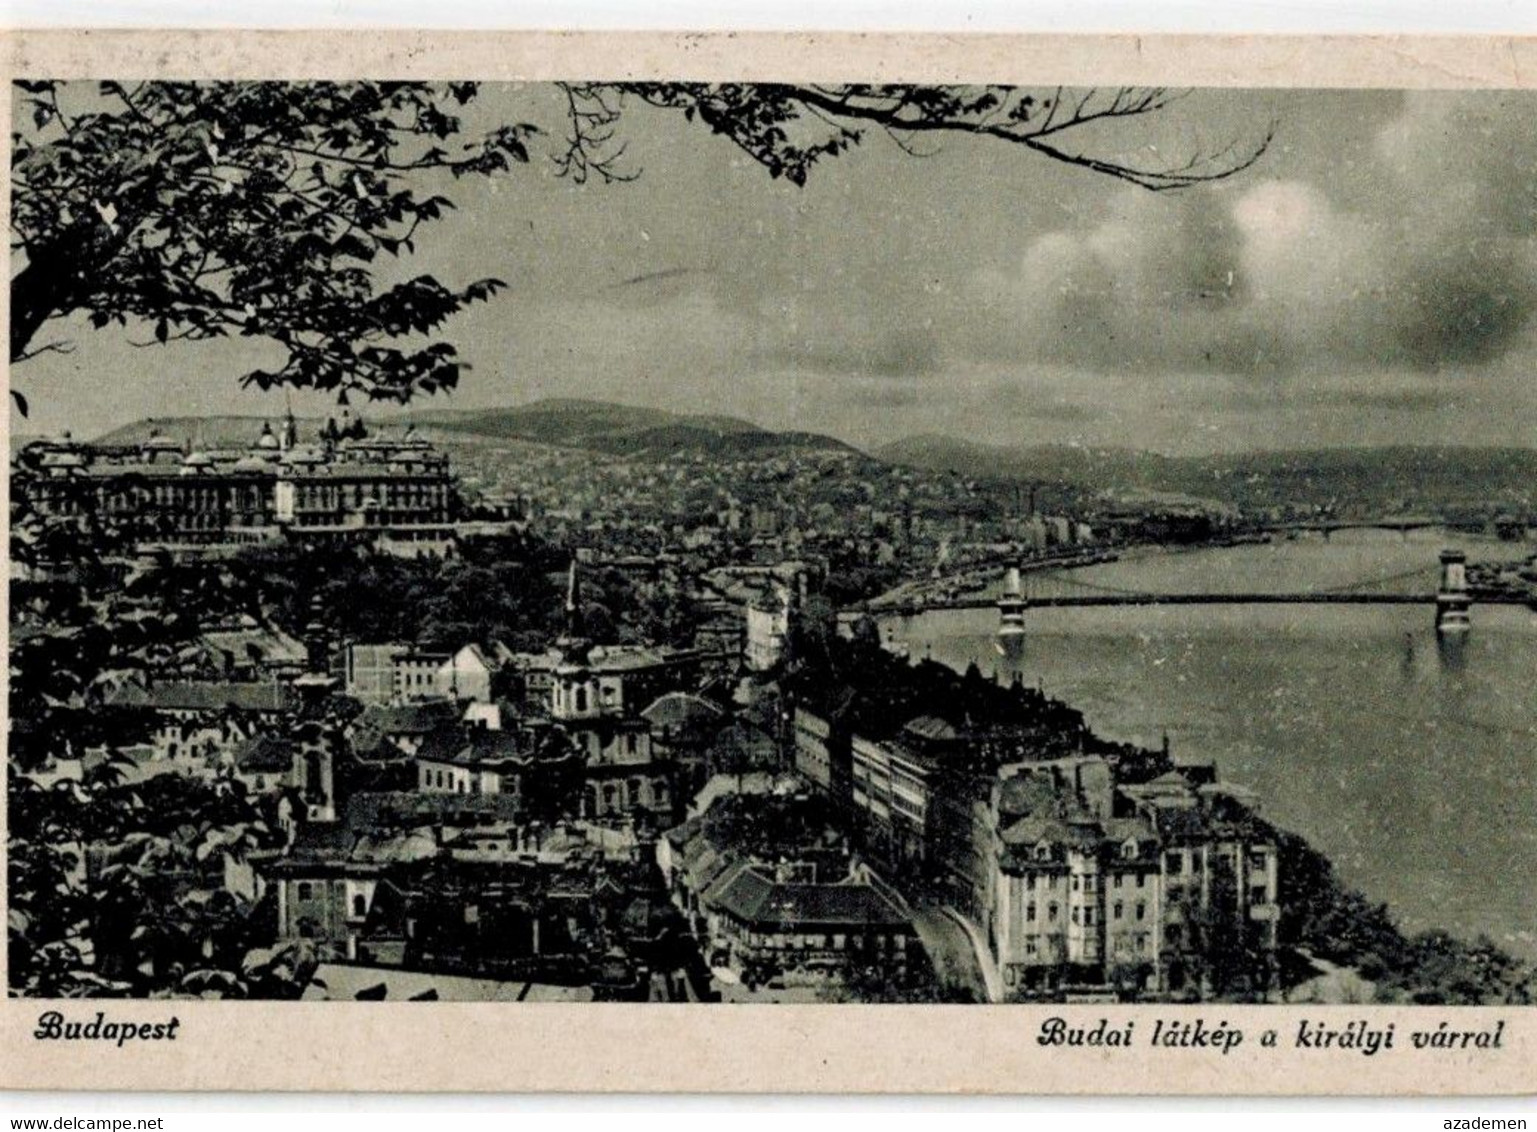 BUDAPEST 1949 - Storia Postale